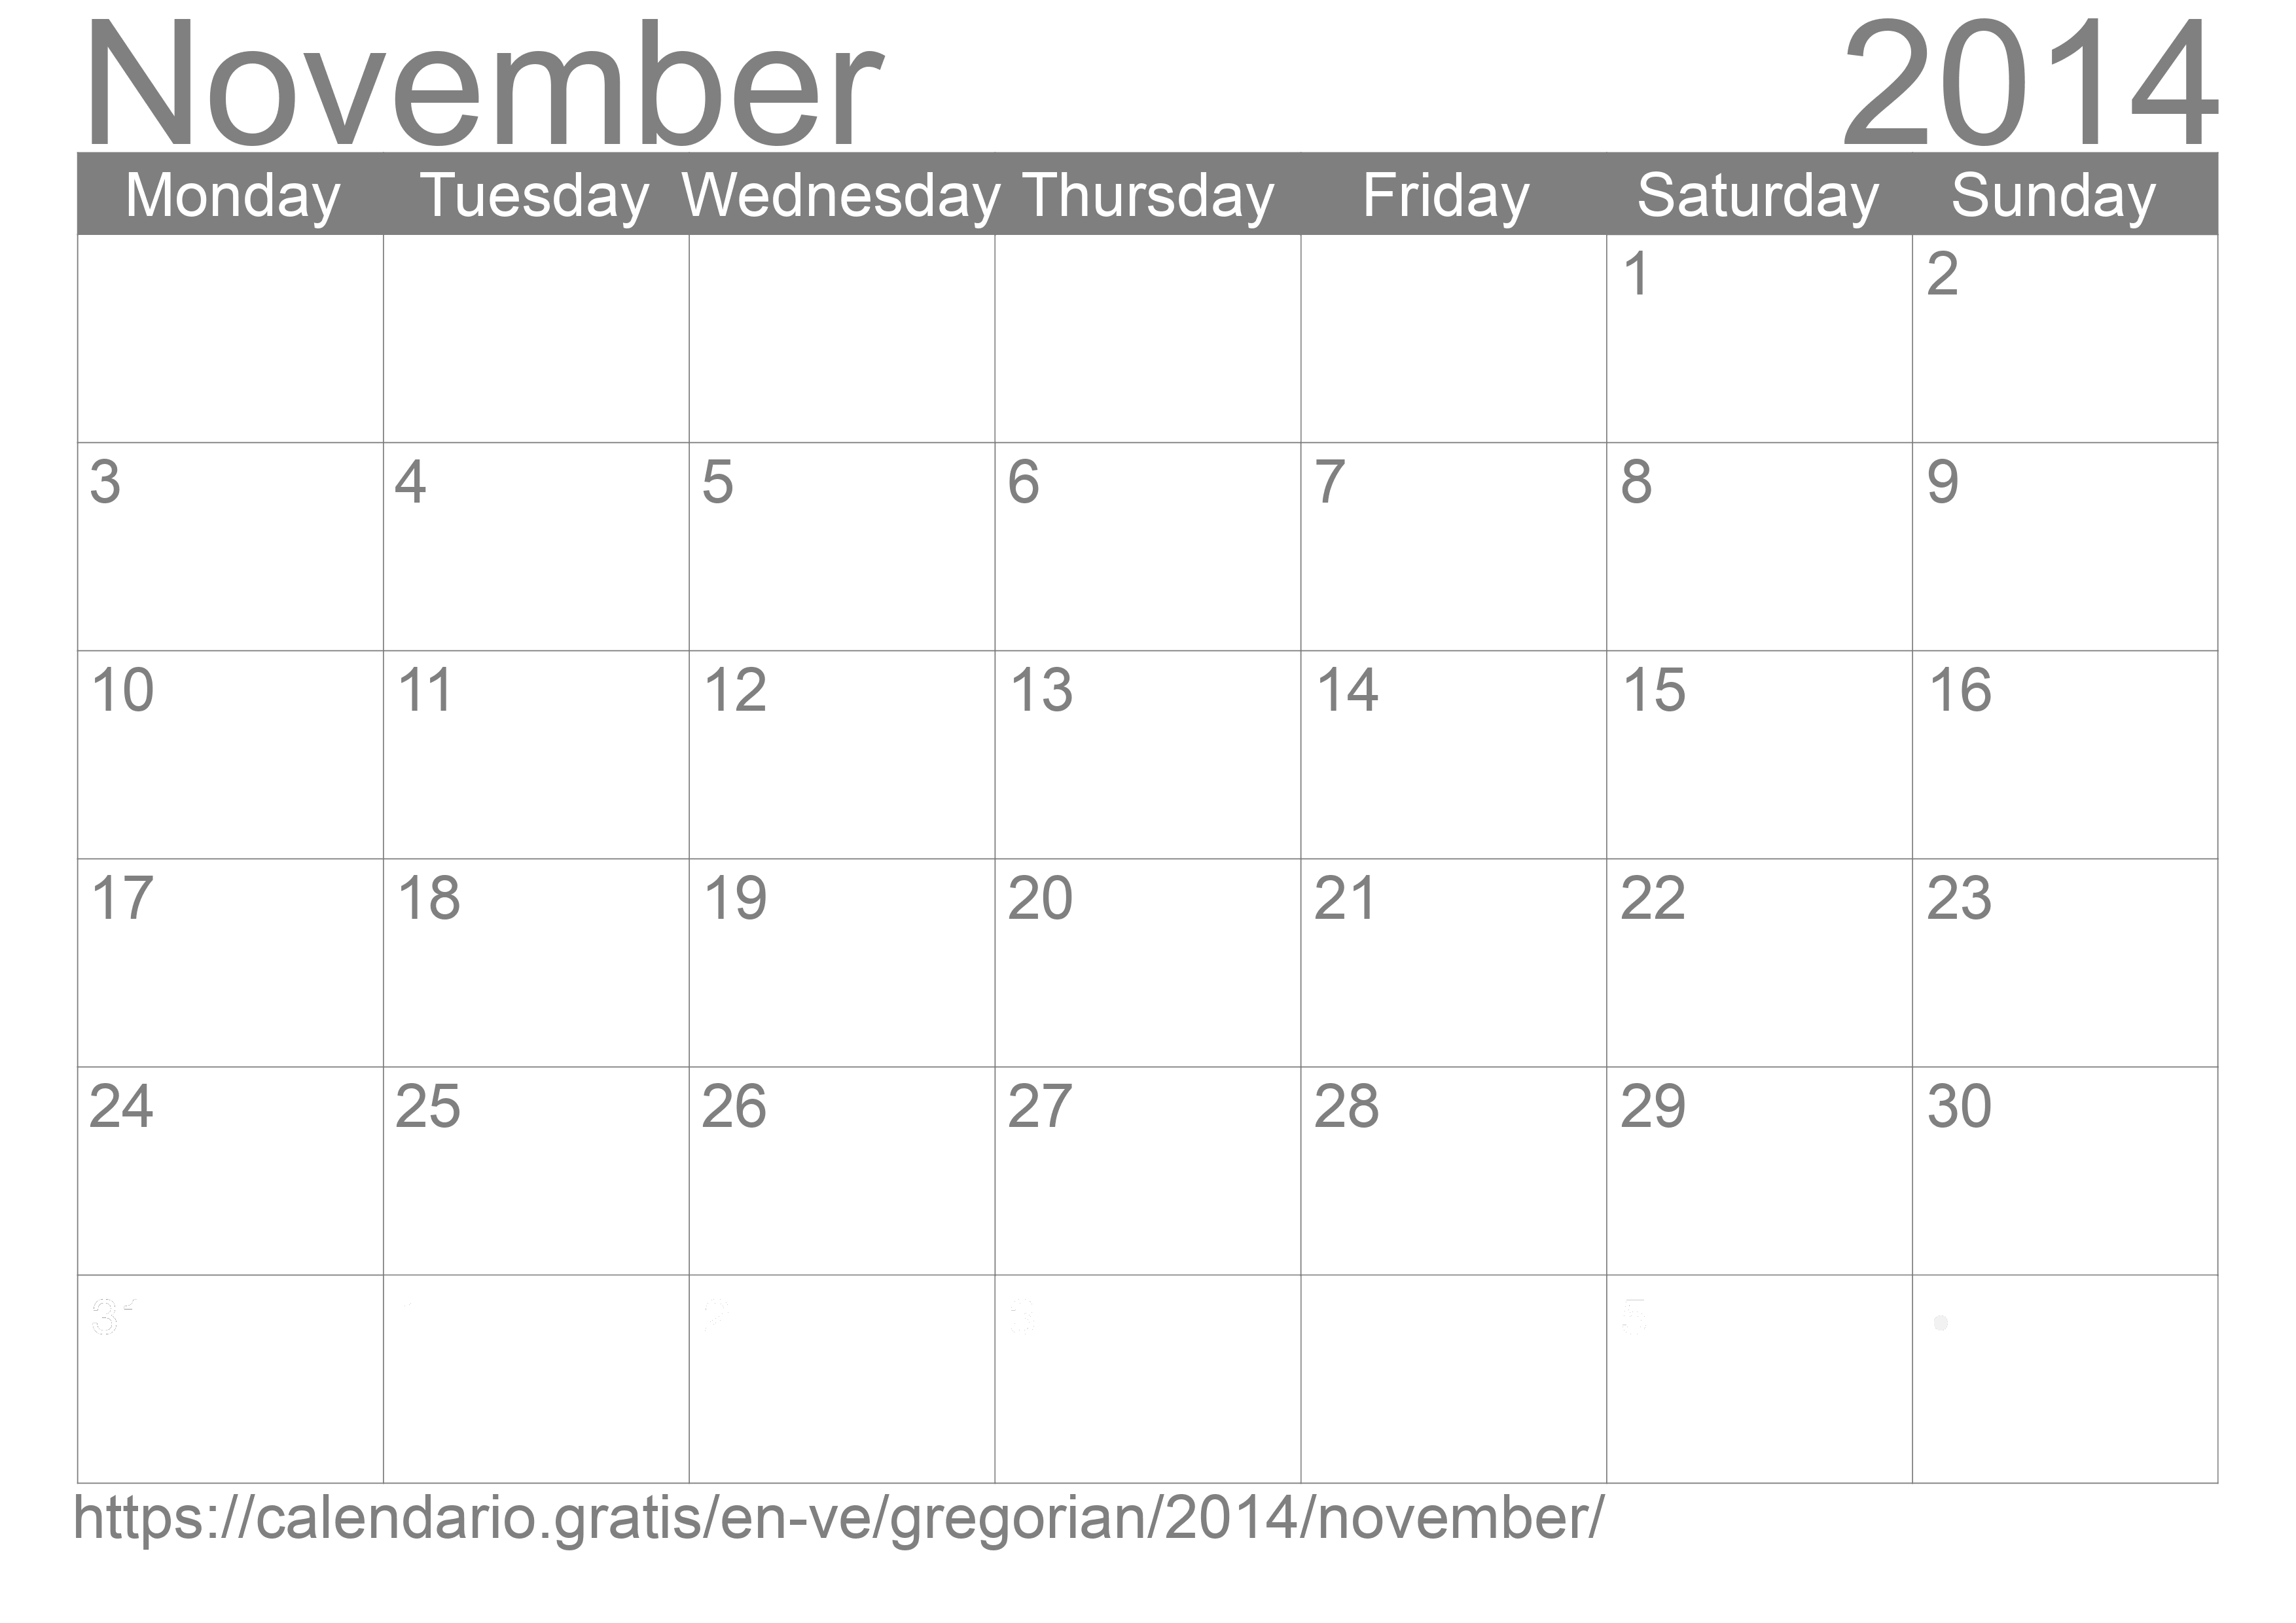 Calendar November 2014 to print